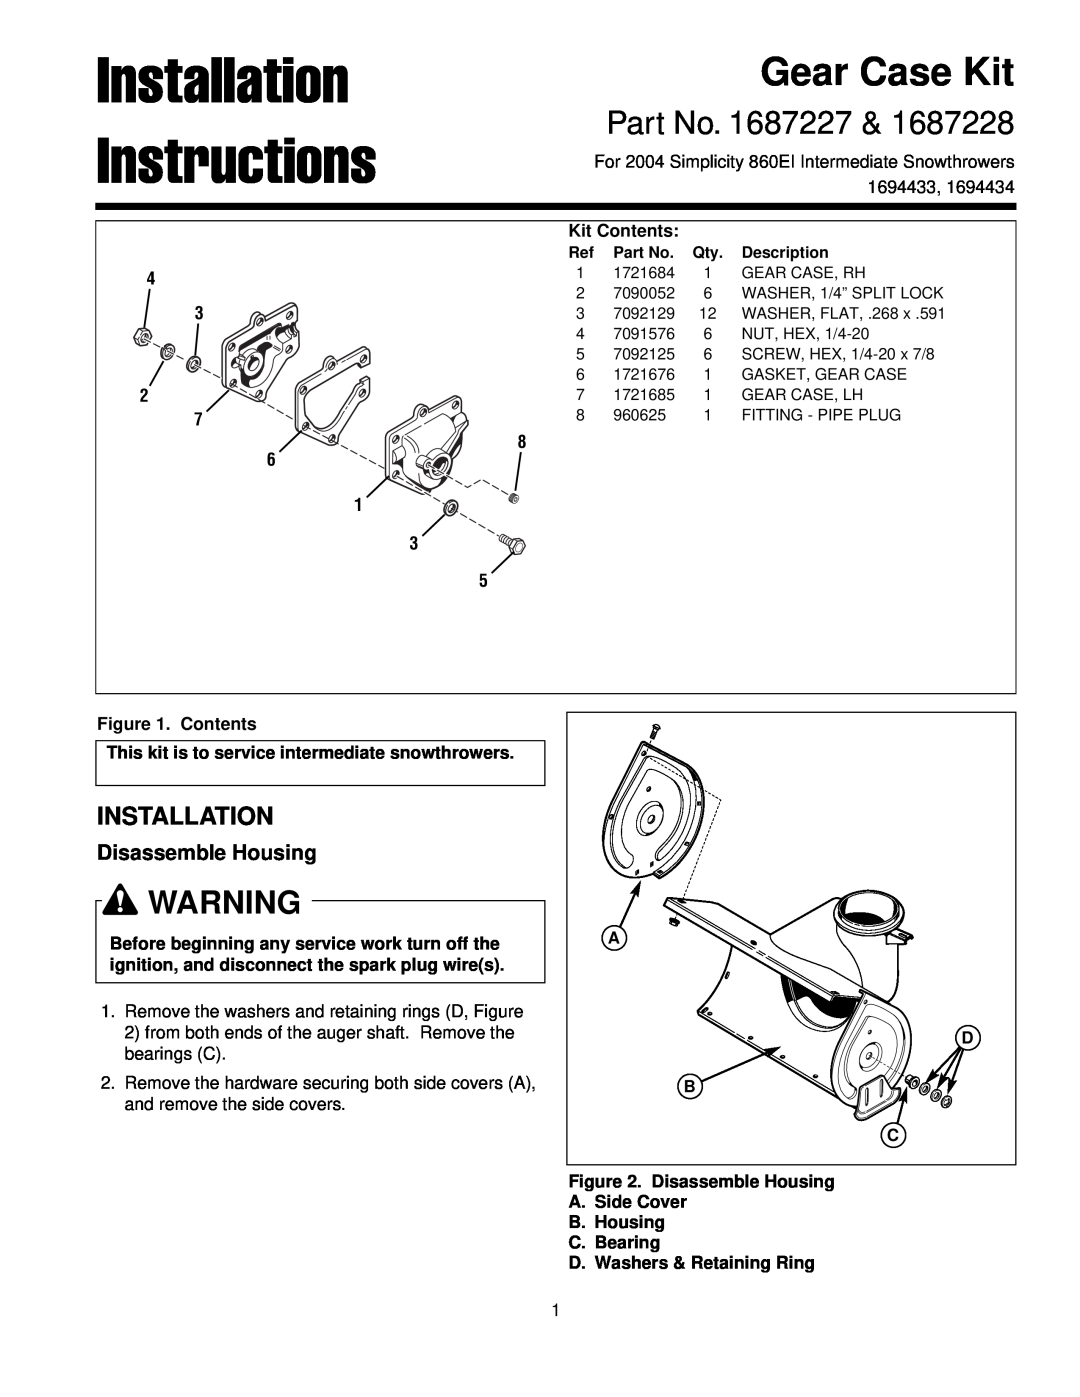 Briggs & Stratton 1687228 installation instructions Disassemble Housing, Installation Instructions, Gear Case Kit 